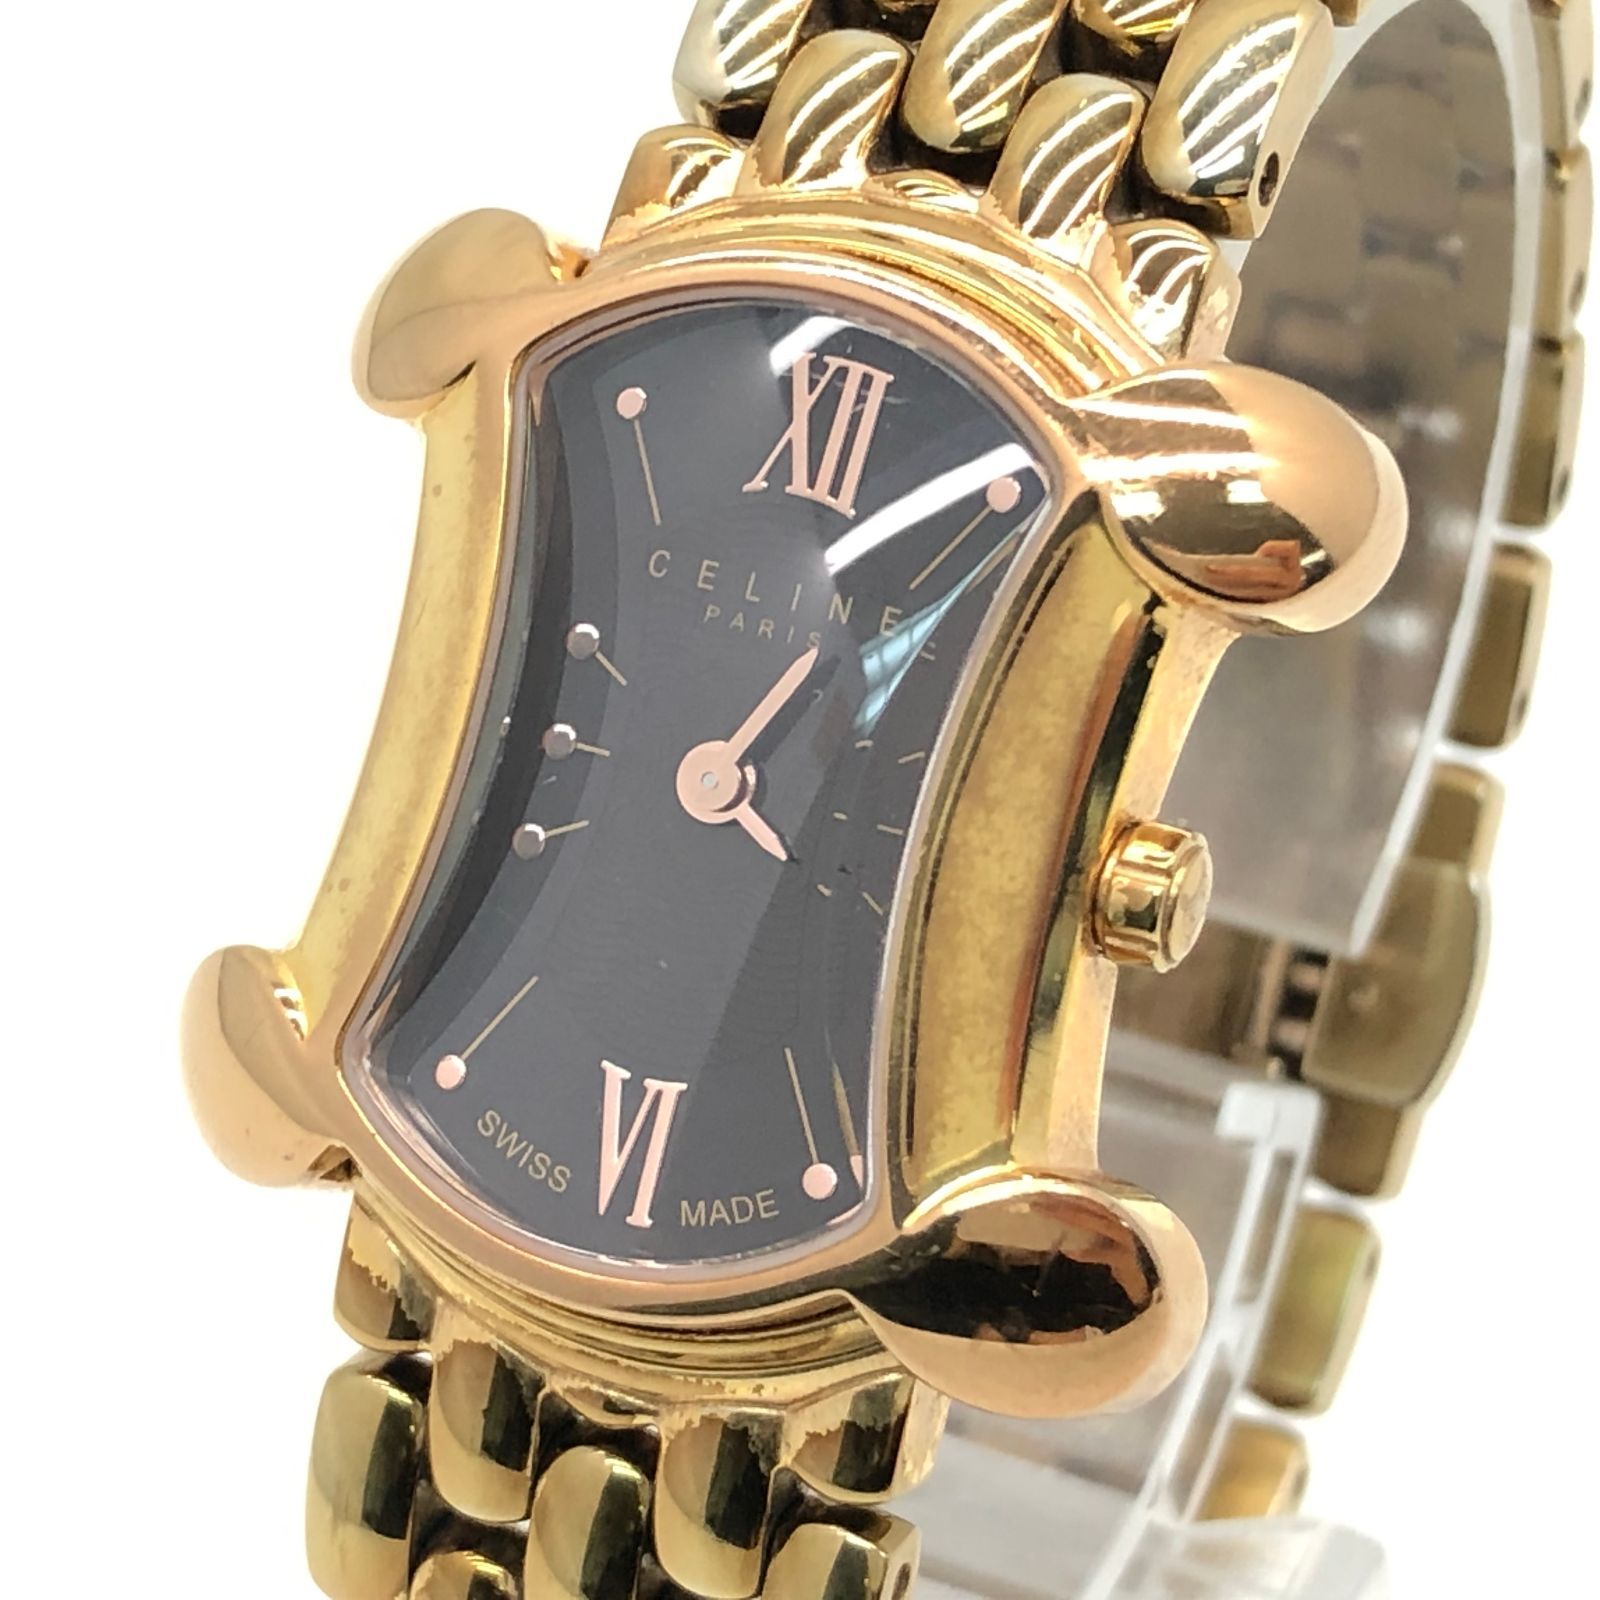 CELINE セリーヌ マカダム 30M/100FT ブラゾン 腕時計 ピンクゴールド